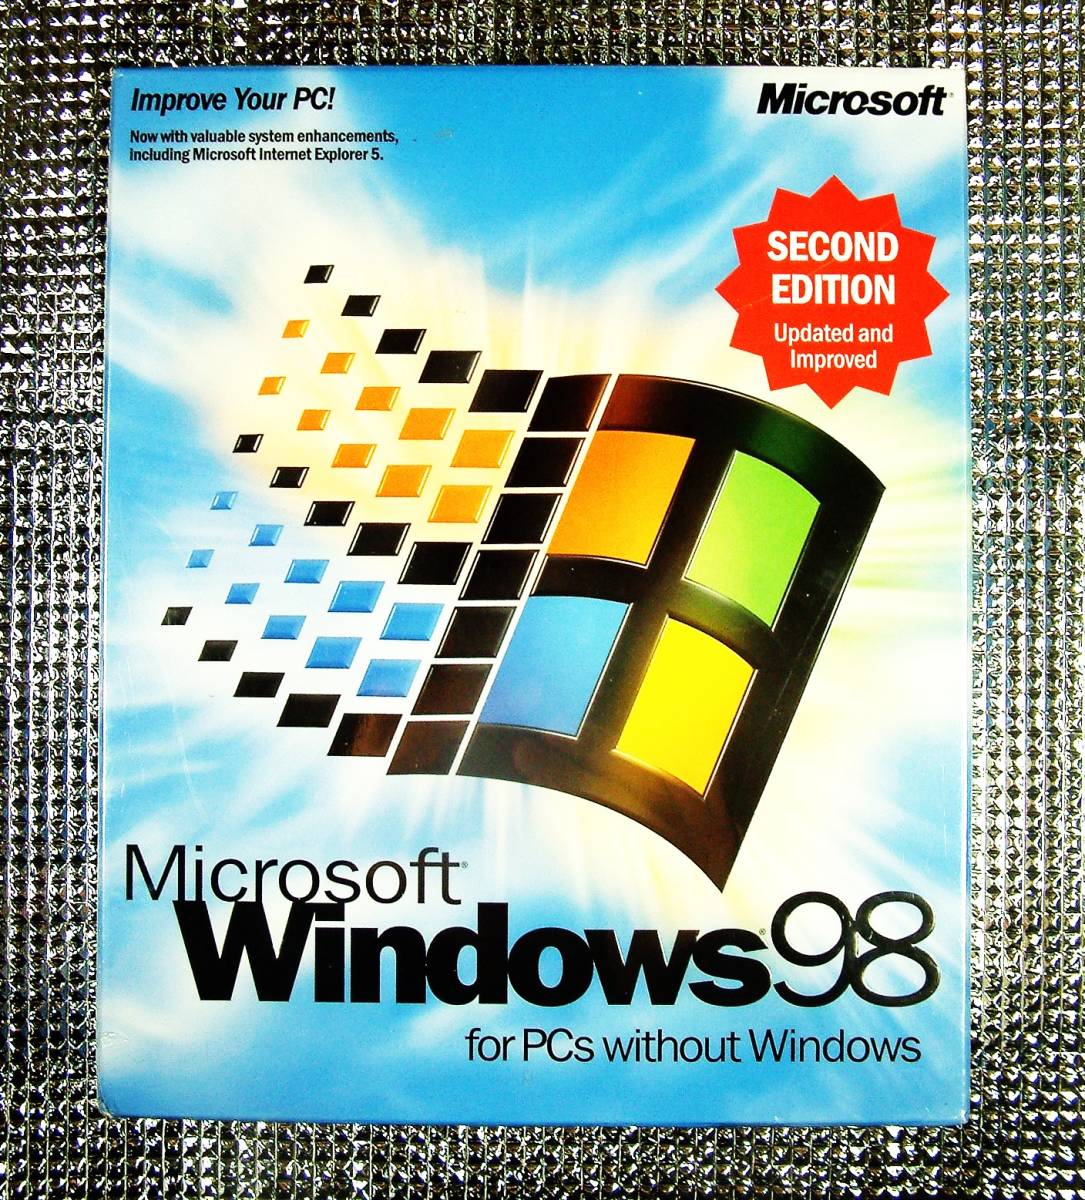 【4848】 Microsoft Windows 98 Second Edition Retail English(asia) 未開封品 アジア向け英語版 SE マイクロソフト ウィンドウズ 製品版